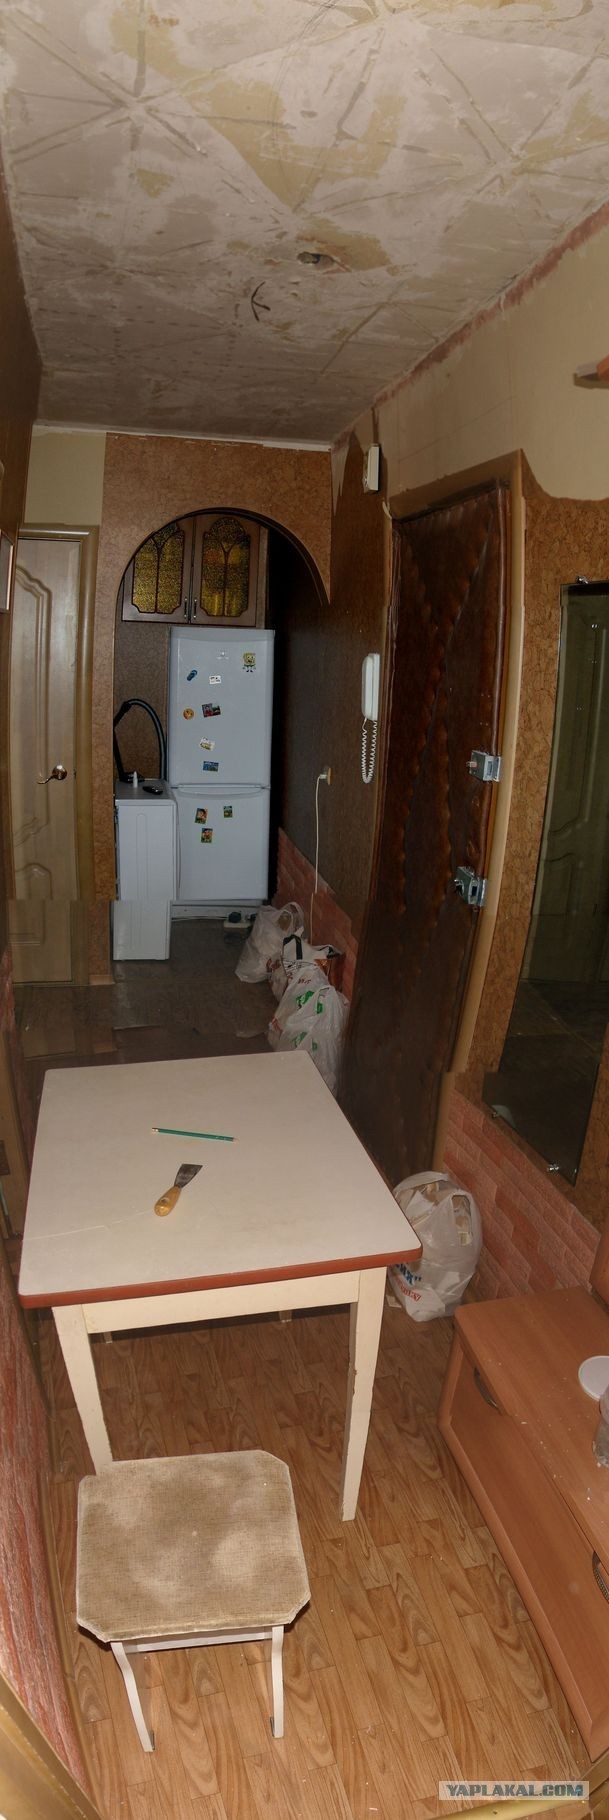 Ремонт в коридоре и кухне